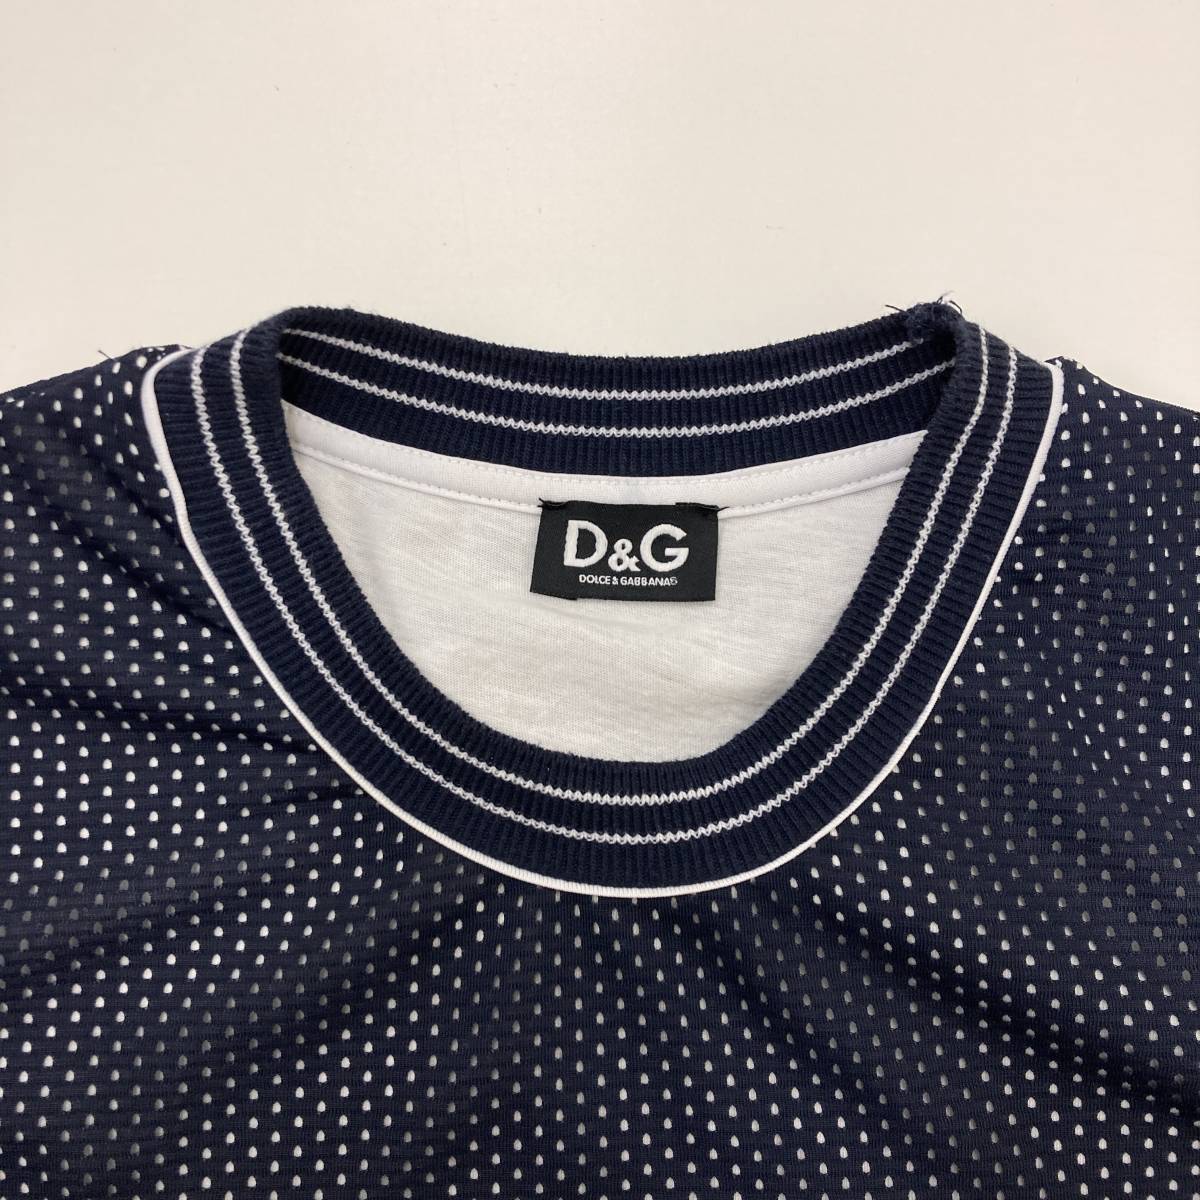 D&G メッシュ ナンバリング 半袖 Tシャツ ネイビー 紺 メンズ Sサイズ DOLCE&GABBANA ドルチェ&ガッバーナ ドルガバ カットソー 2020184_画像8